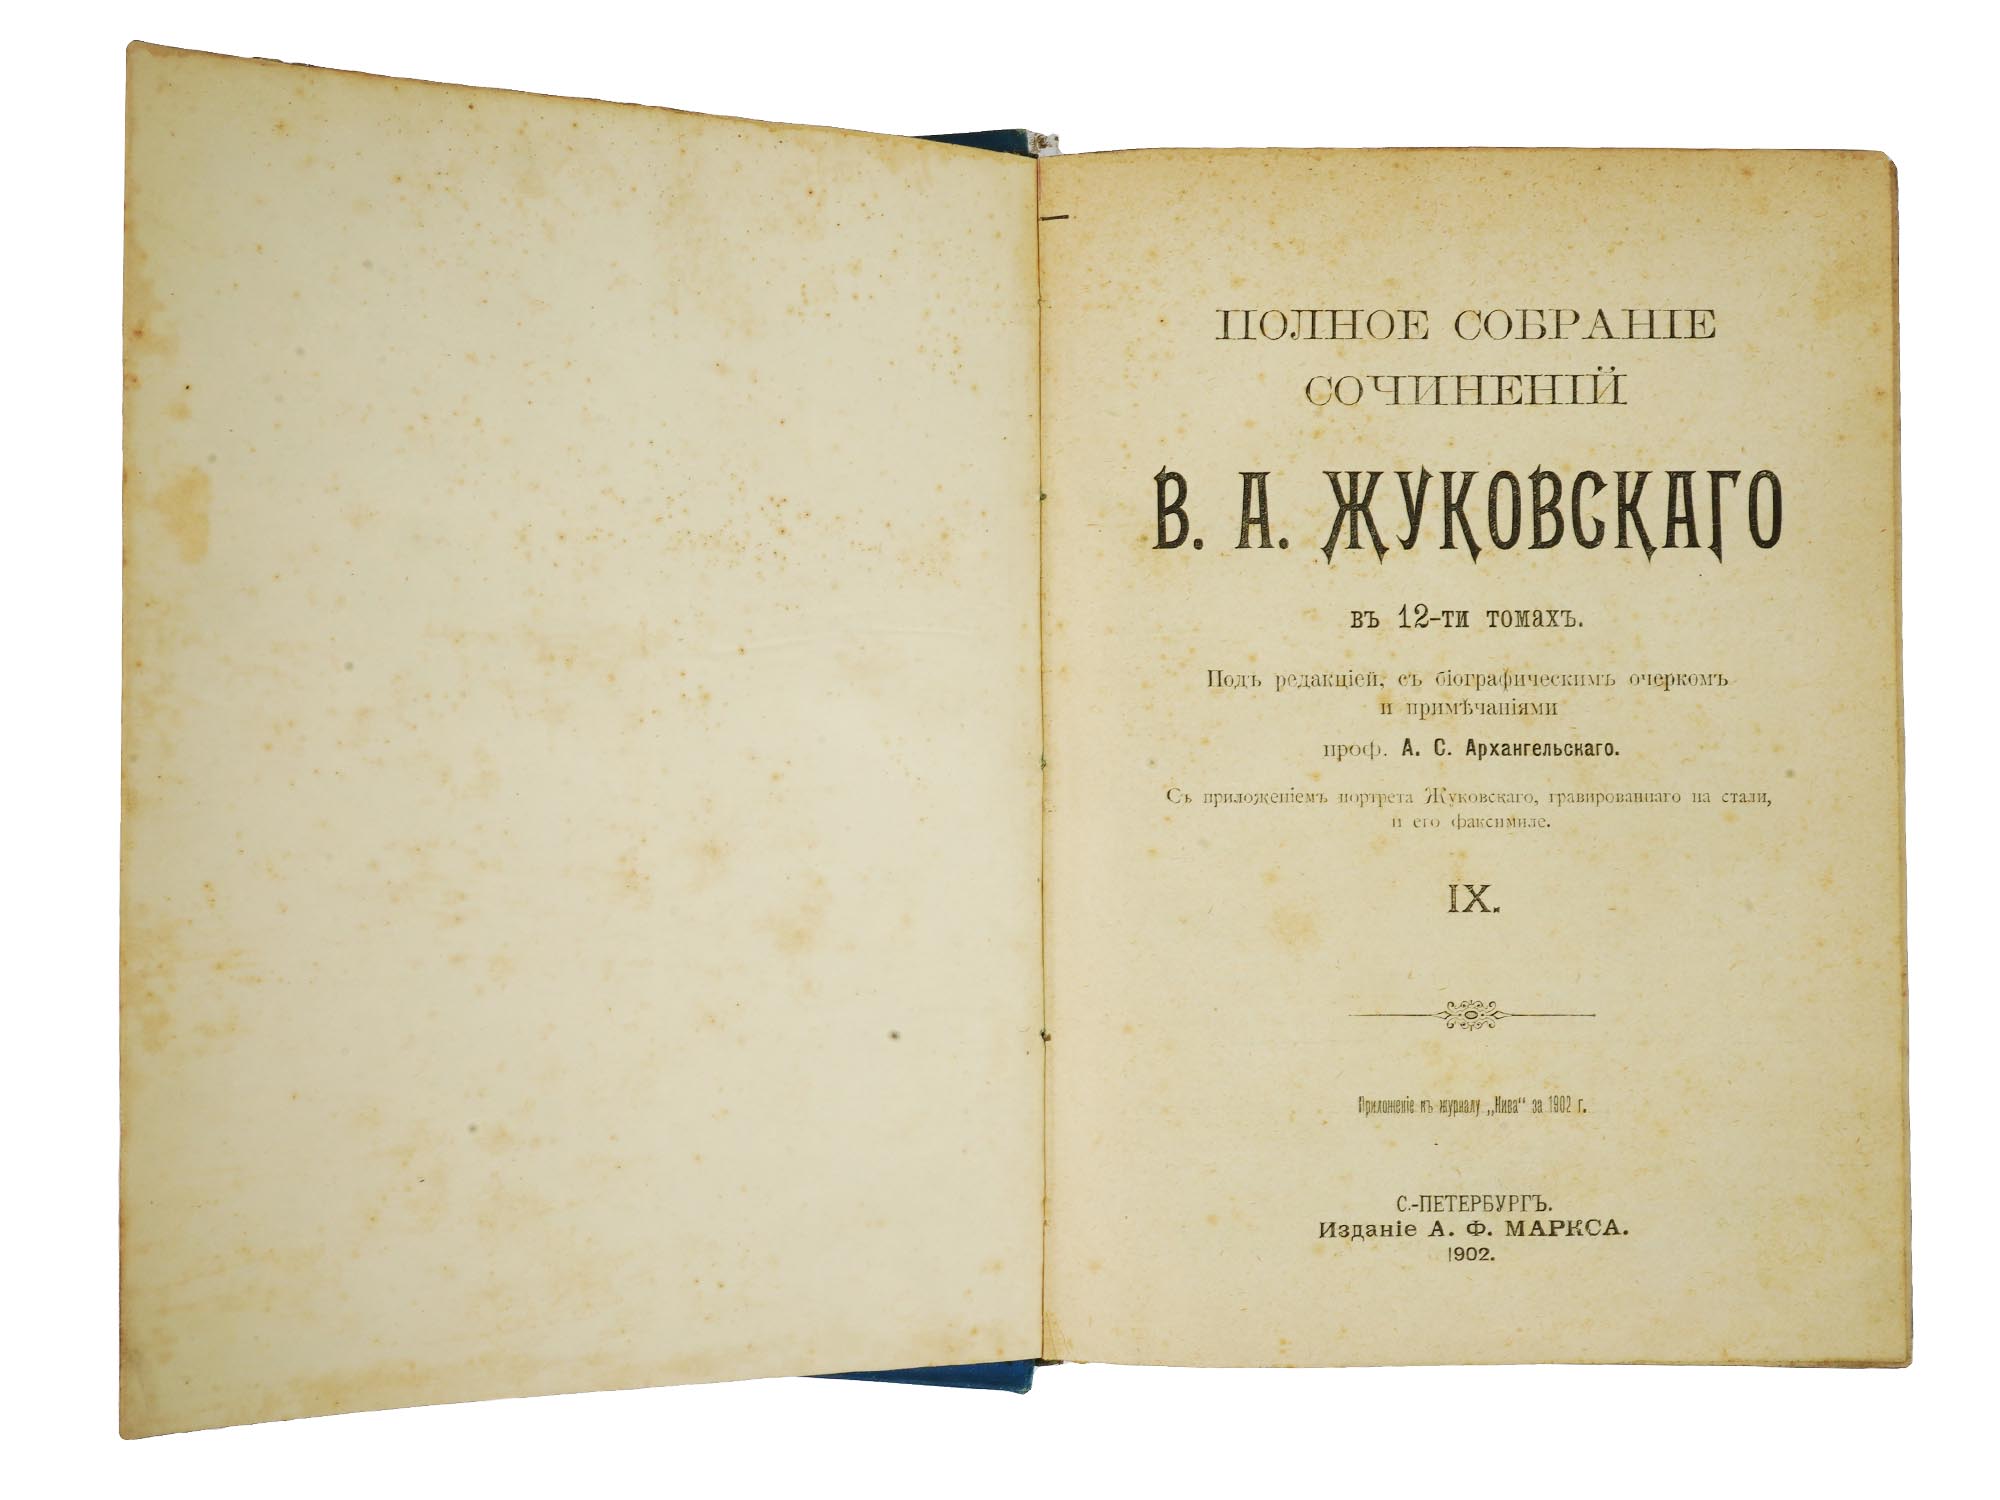 RUSSIAN BOOKS V ZHUKOVSKY COMPLETE WORKS 1902 PIC-7